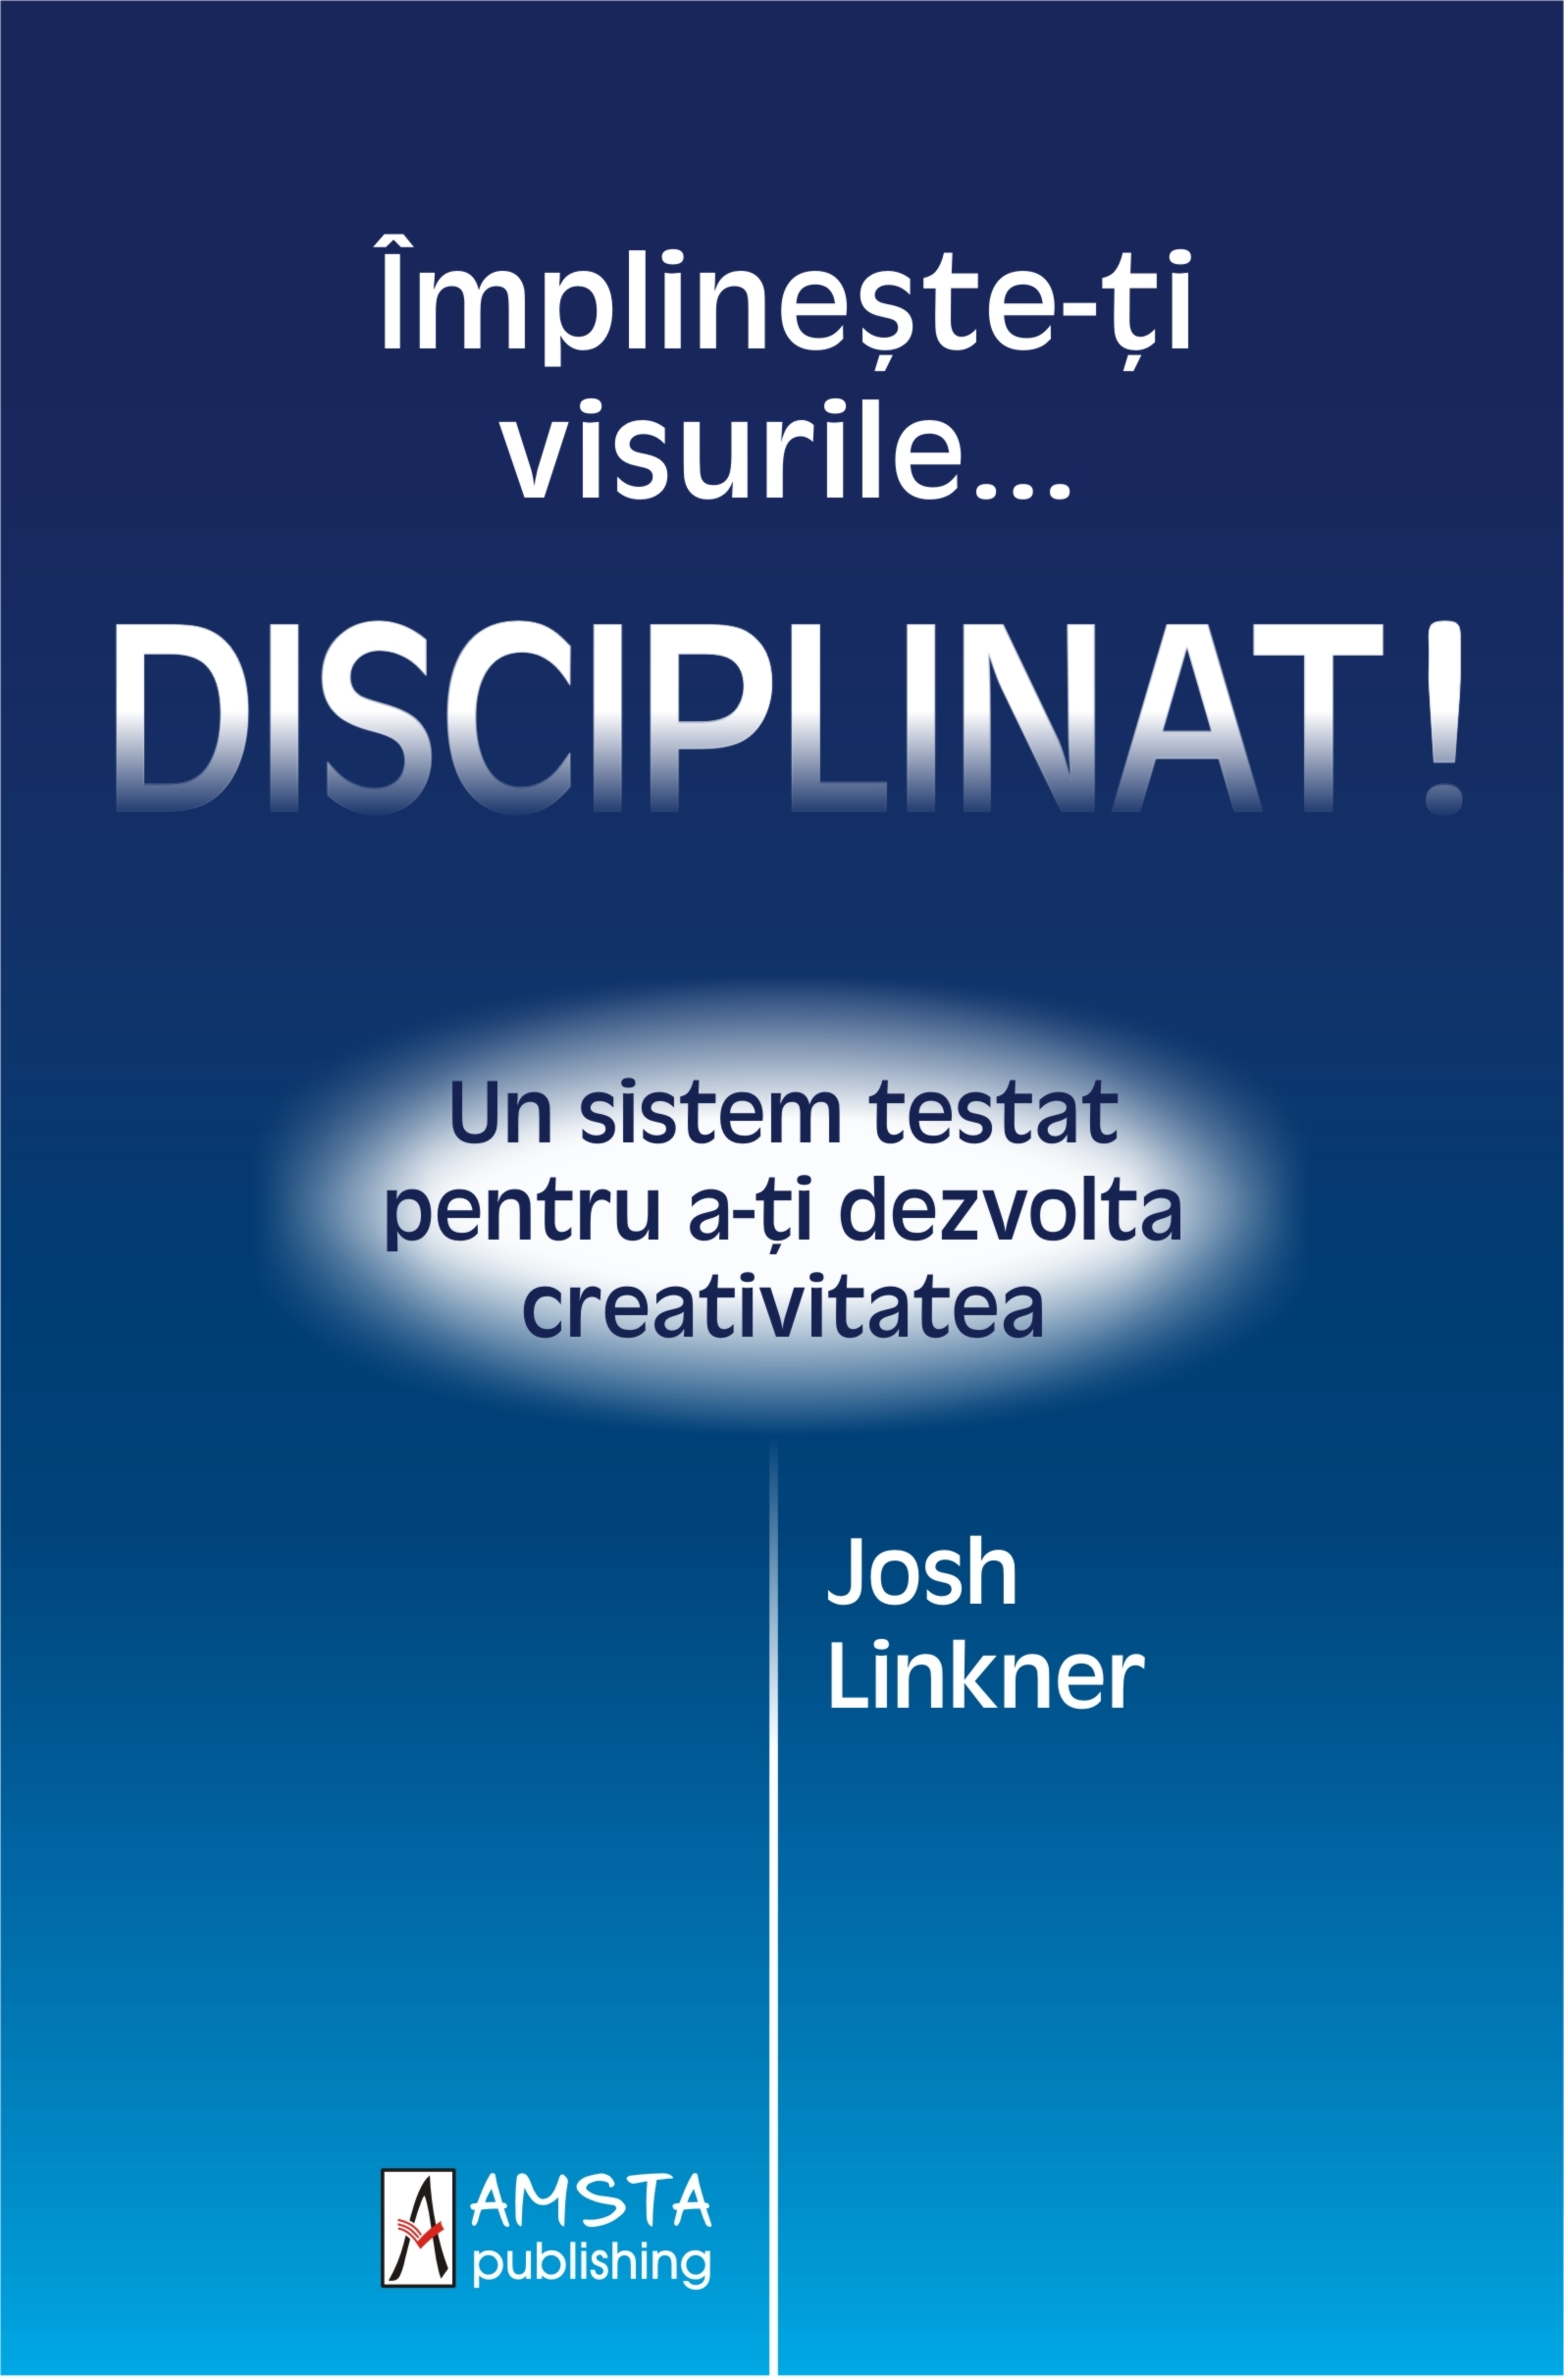 PDF Implineste-ti visurile… disciplinat! | Josh Linkner Amsta Publishing Carte